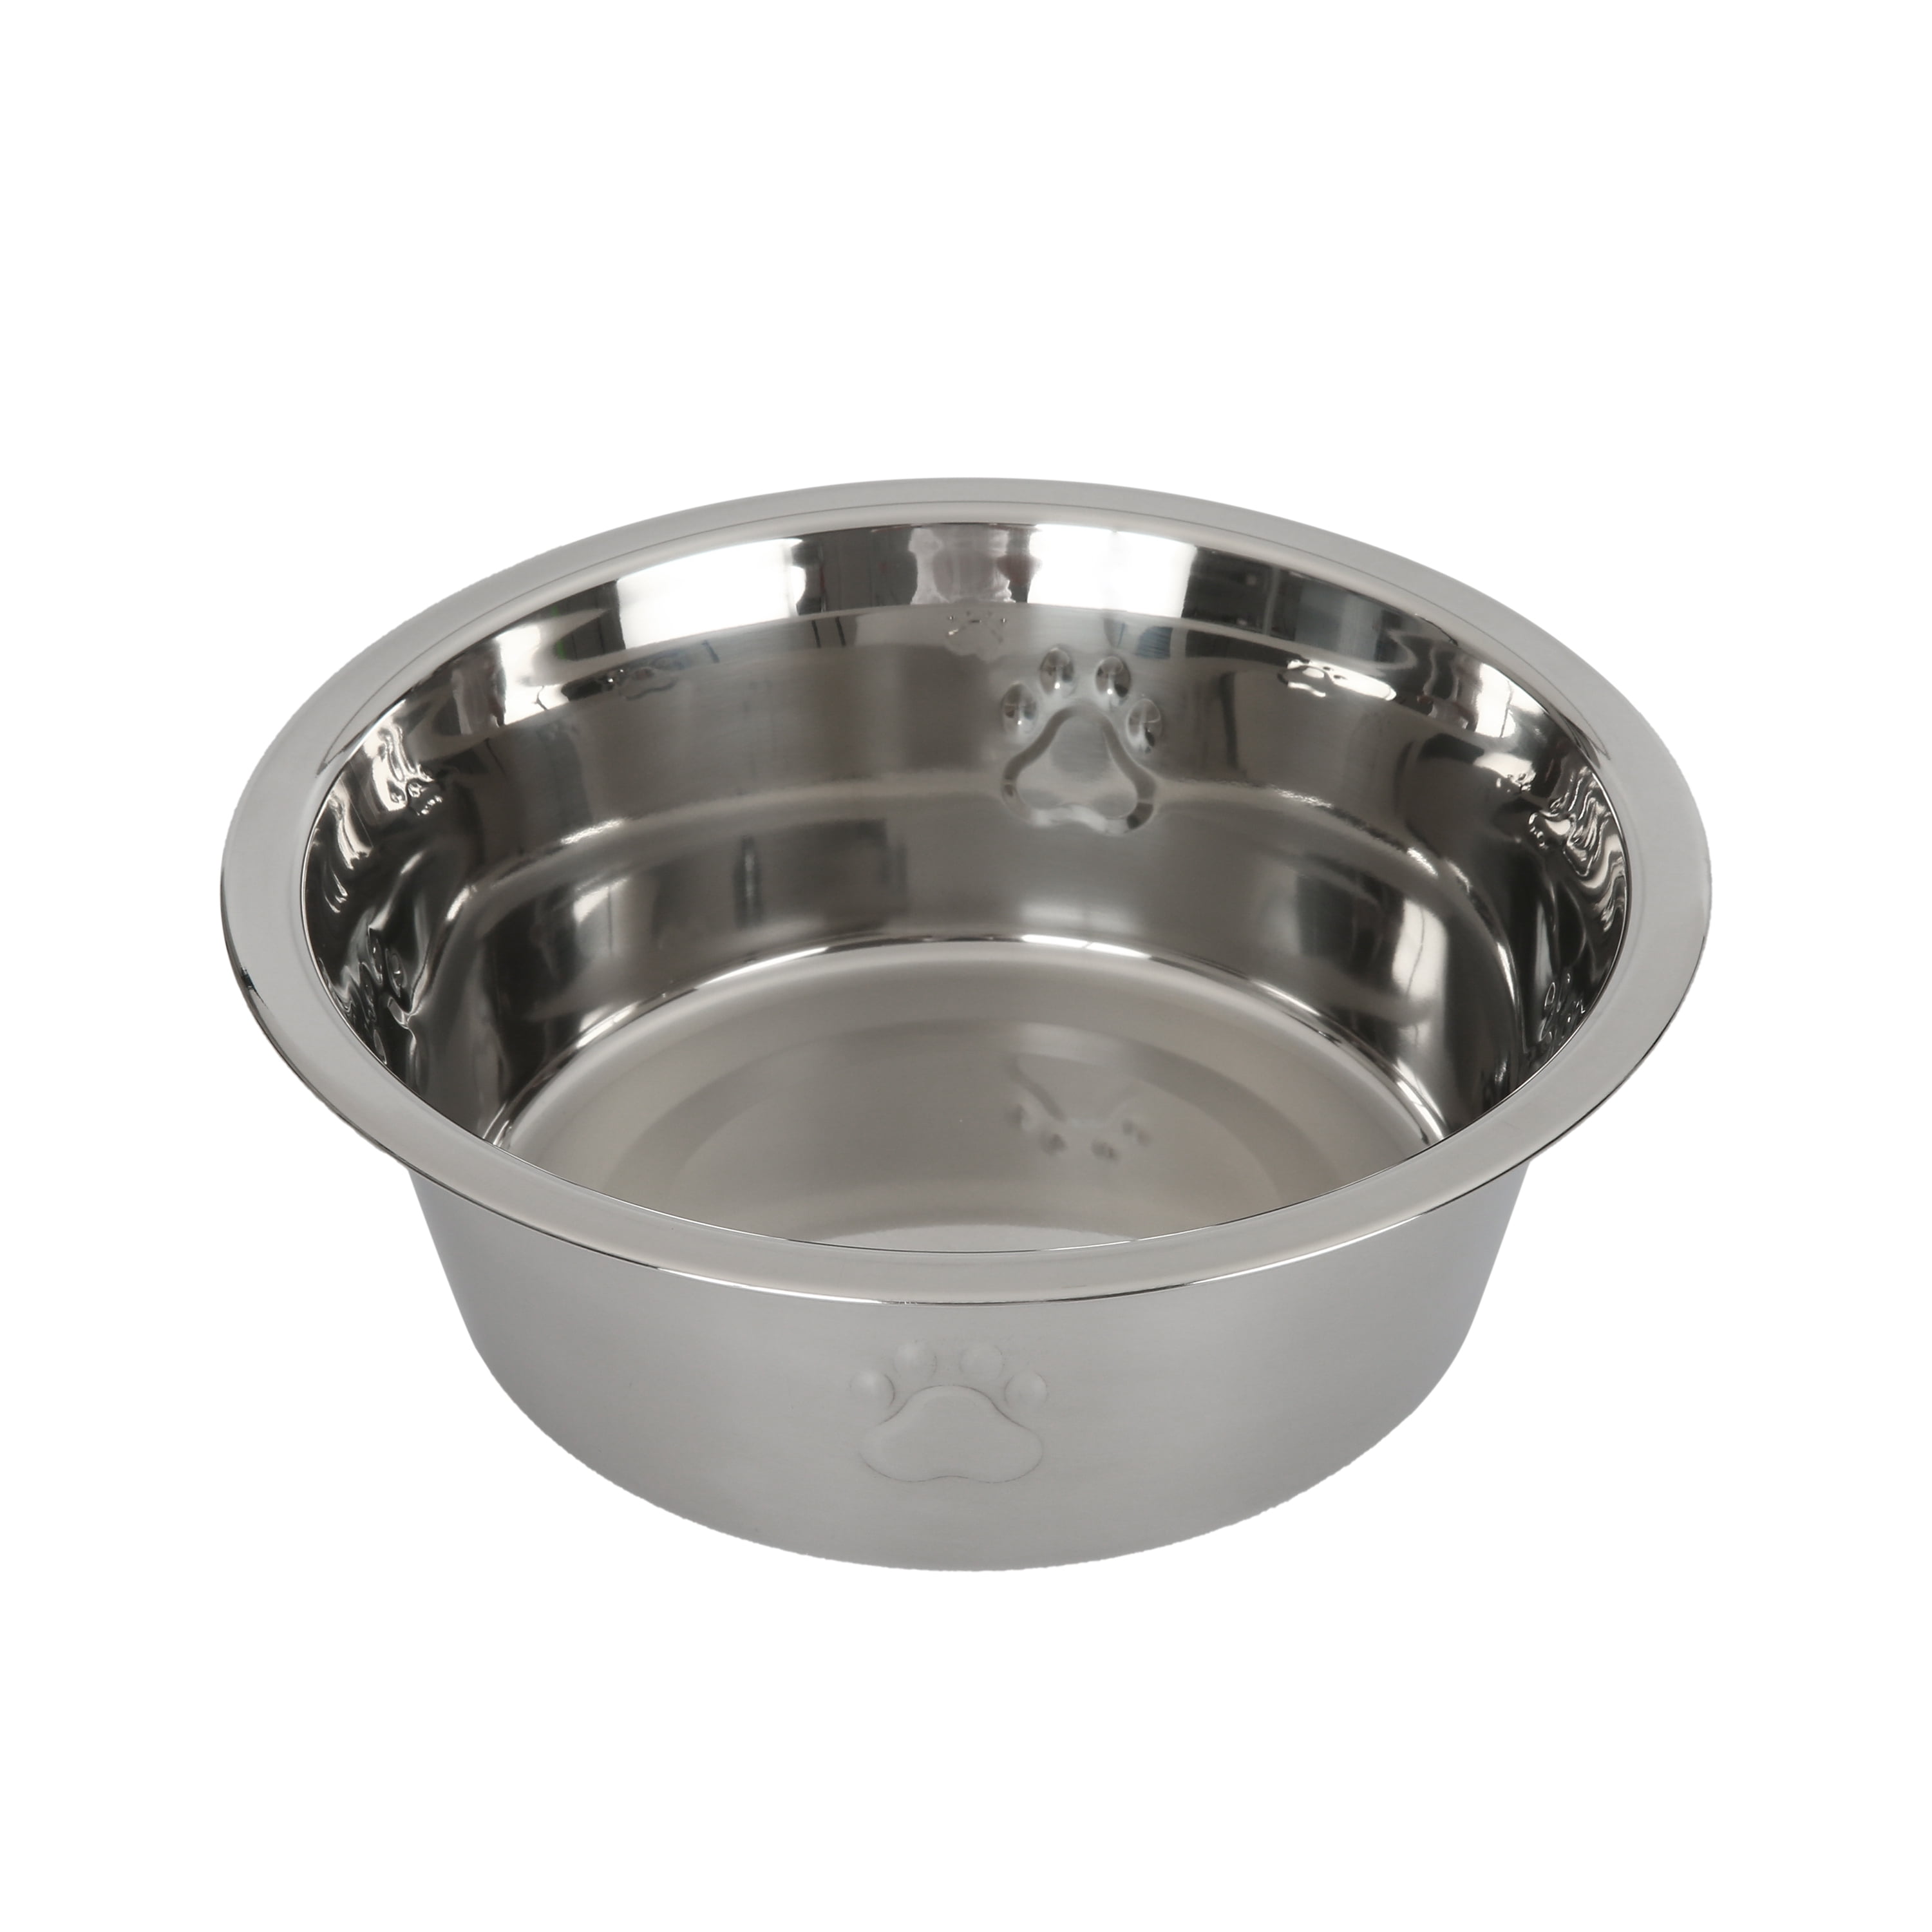 Vibrant Life Stainless Steel Paw Print Dog Bowl, Medium